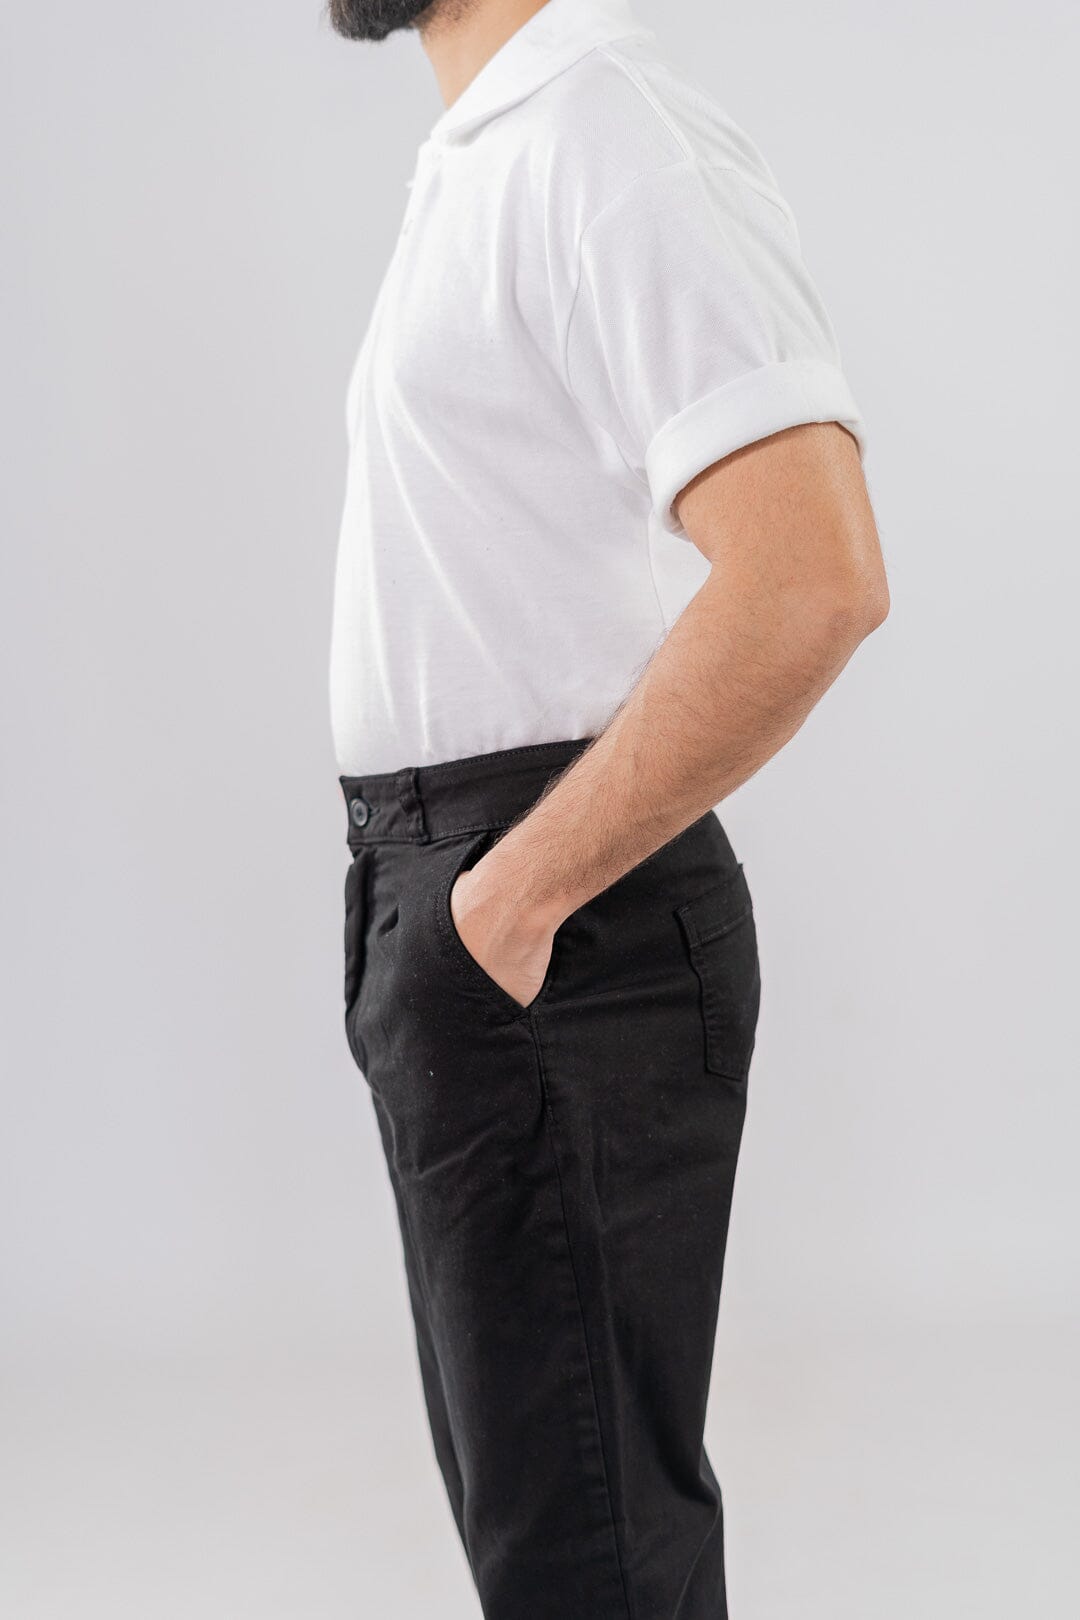 Coventry Men's Short Sleeve Polo Shirt Men's Polo Shirt Image 